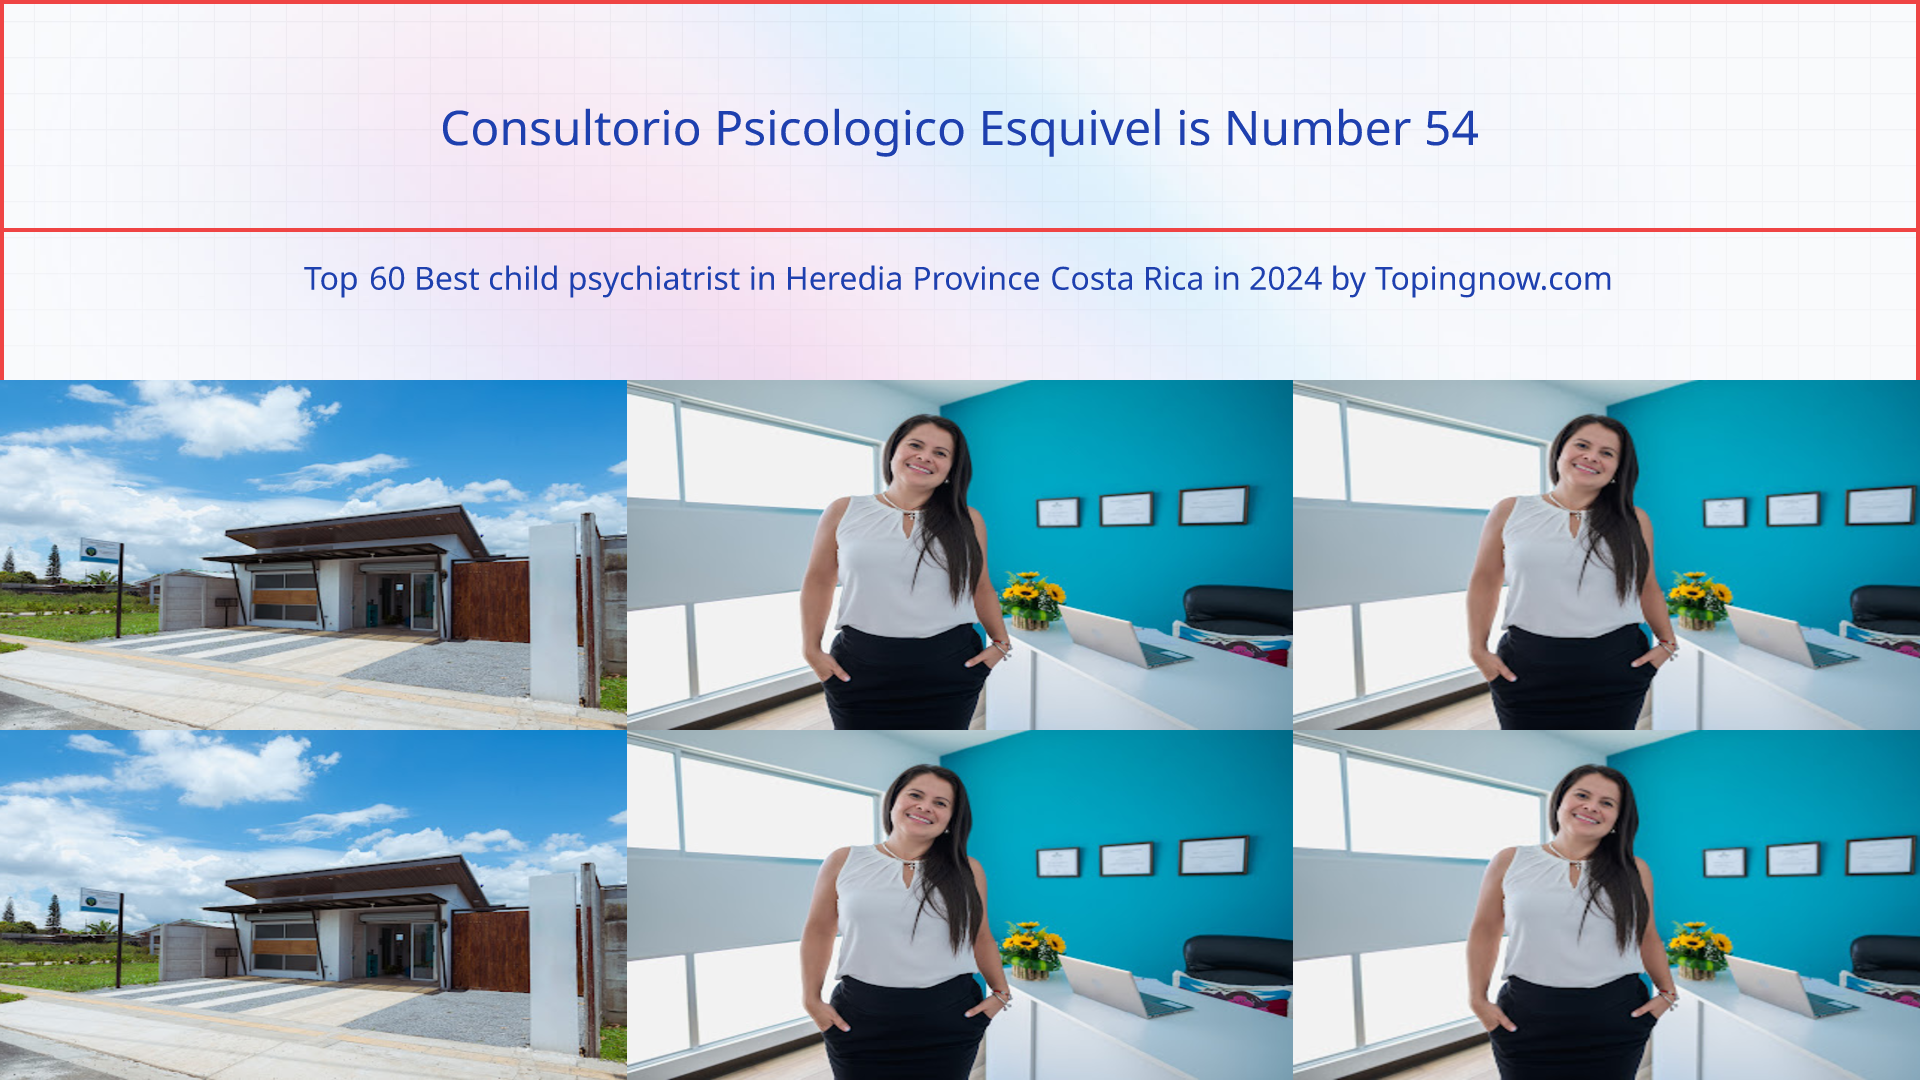 Consultorio Psicologico Esquivel: Top 60 Best child psychiatrist in Heredia Province Costa Rica in 2024